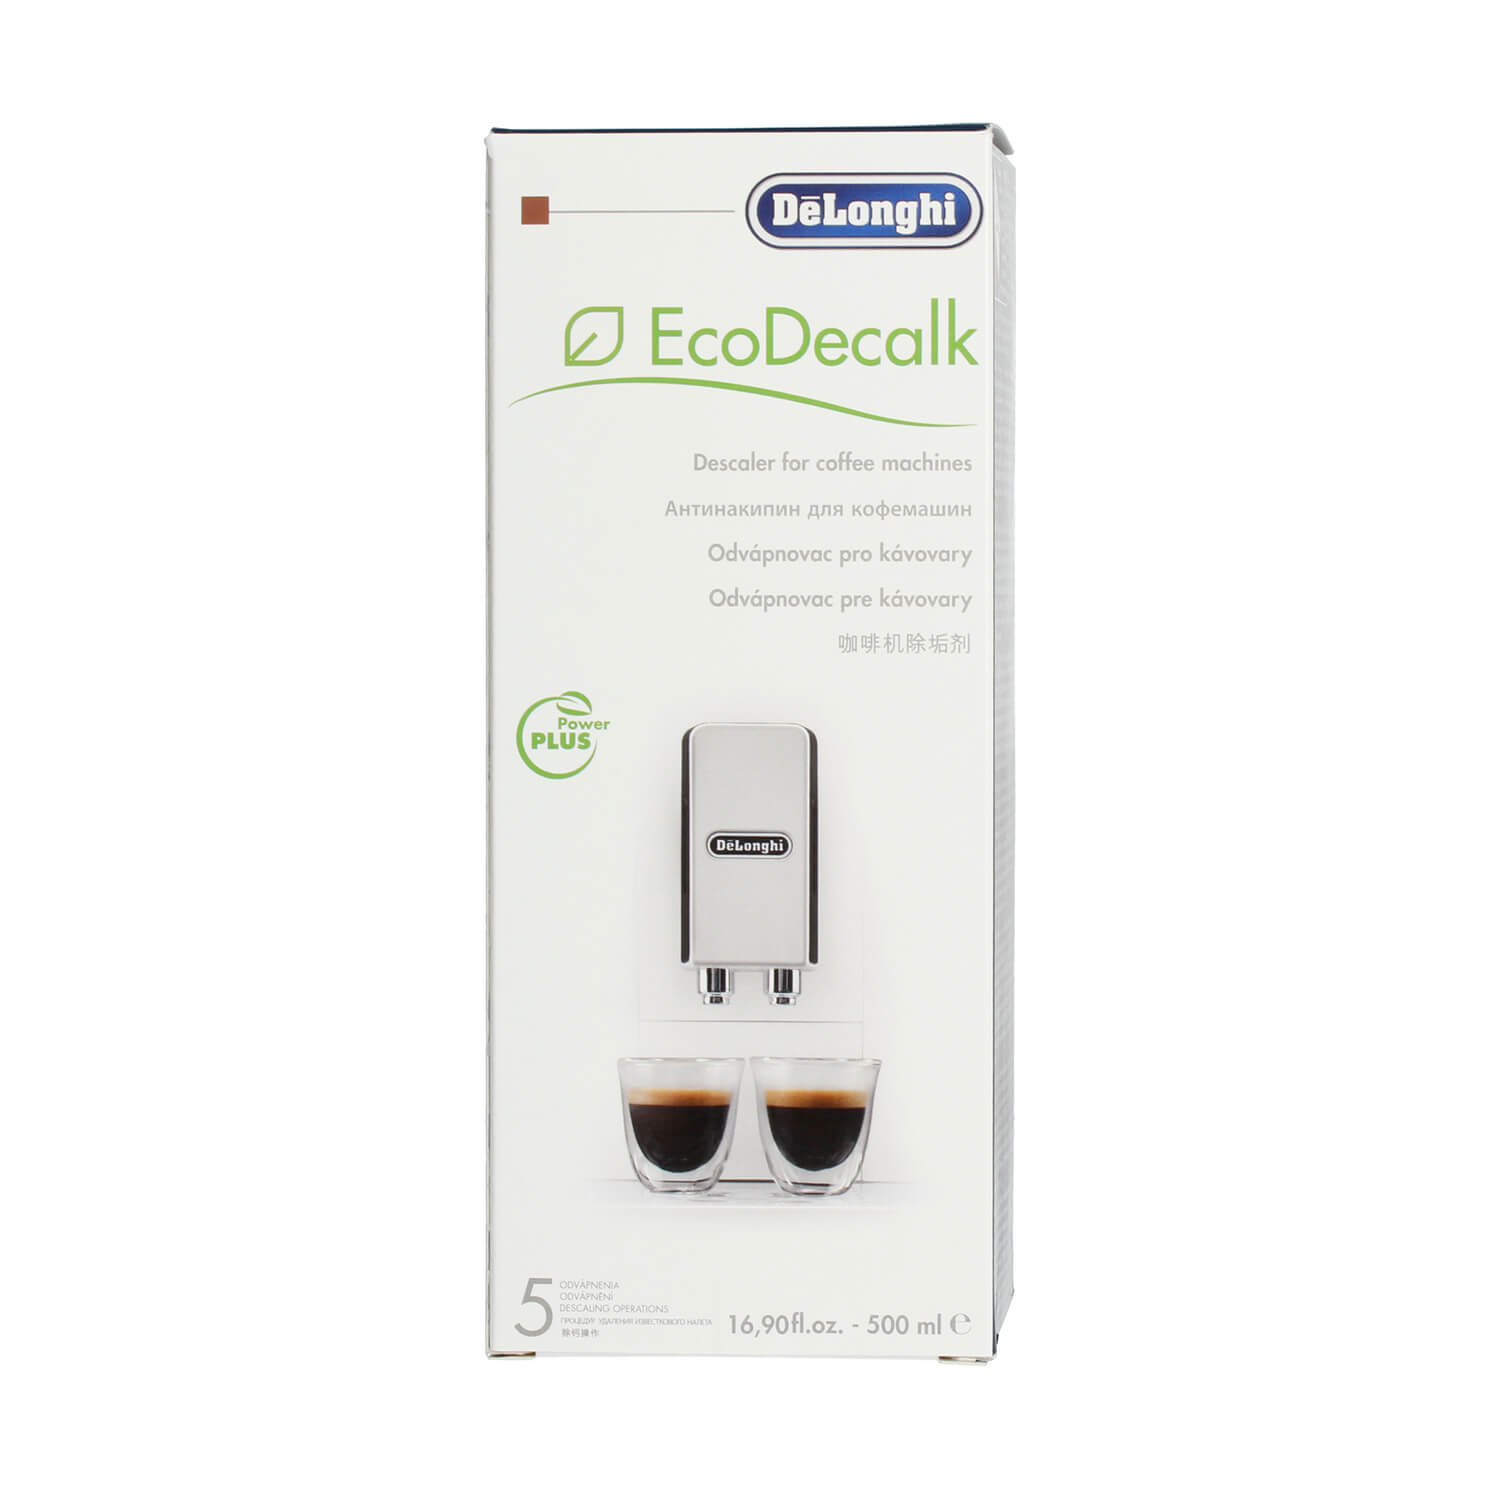 DeLonghi Ecodecalk Descaling Liquid- 500ml- twin pack –